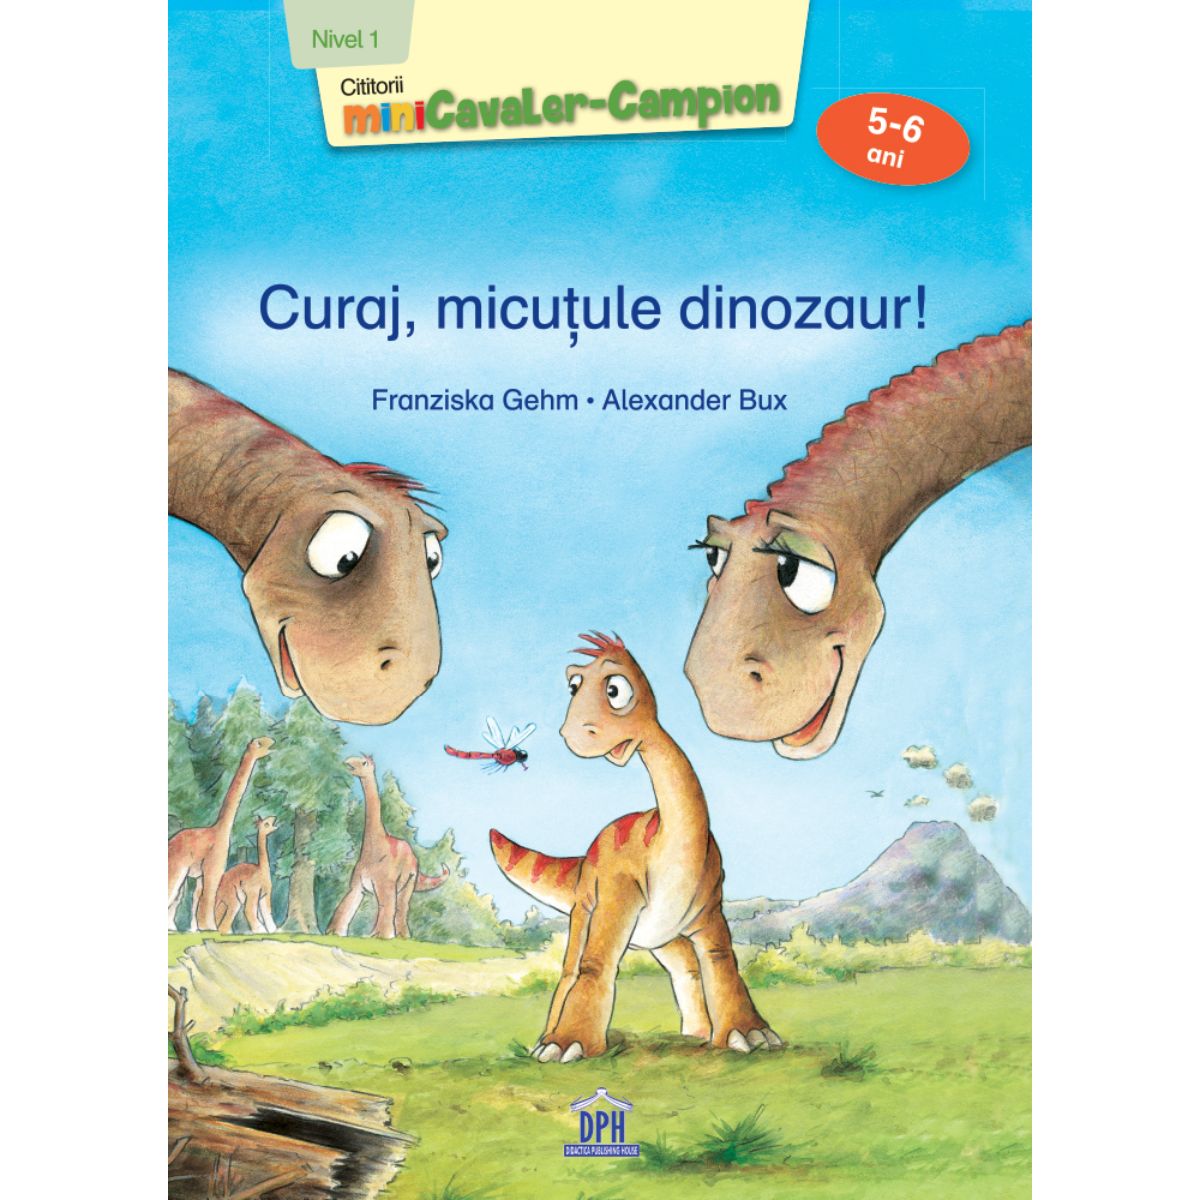 Curaj, micutule dinozaur, Franziska Gehm, Alexander Bux